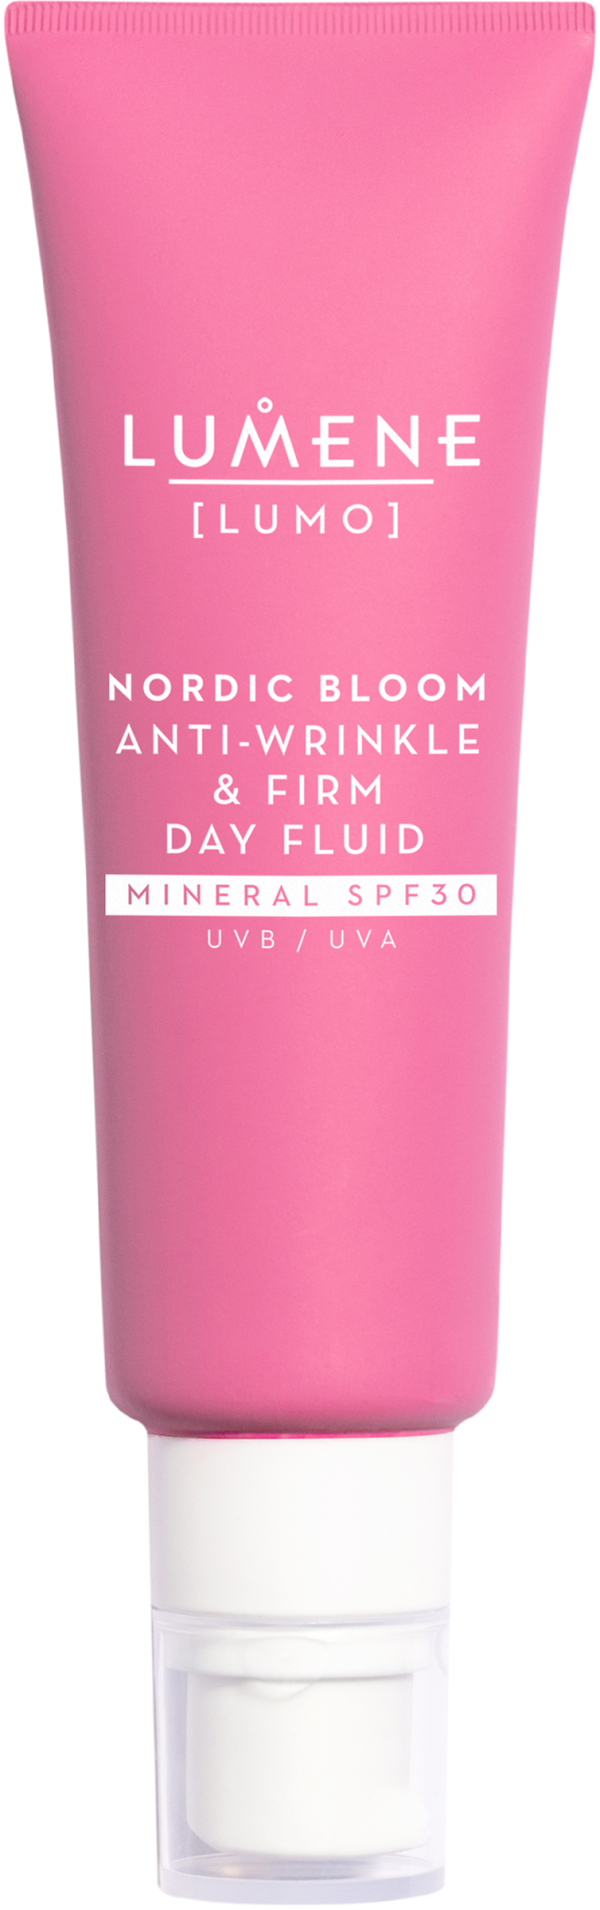 Lumene Nordic bloom anti-wrinkle & firm day fluid mineral spf 30 50 ml